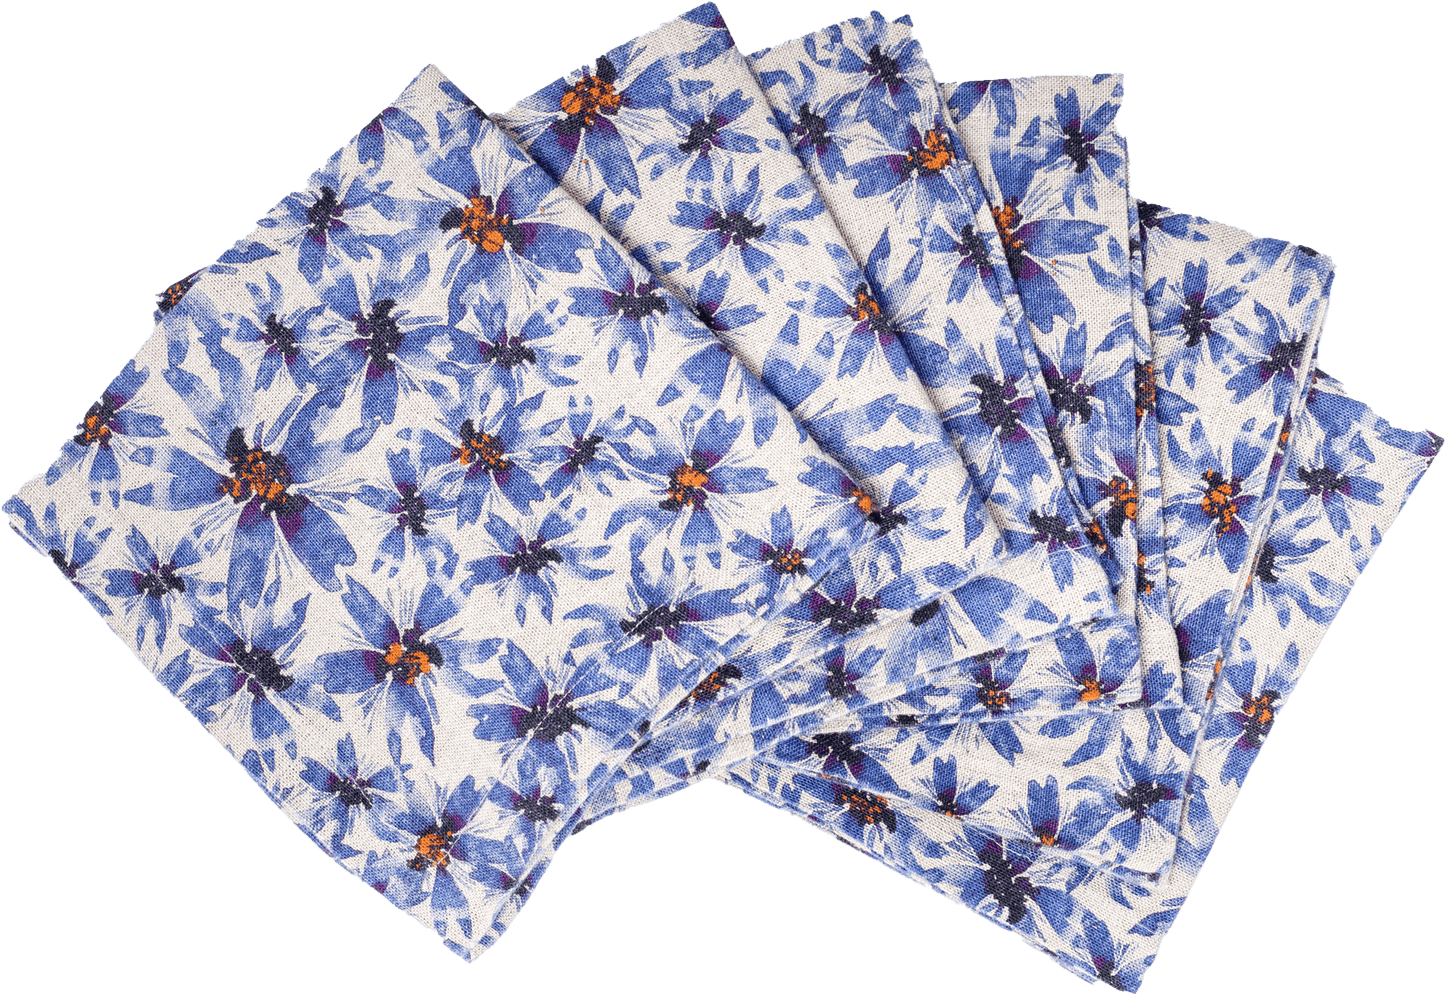 6 Organic Linen Napkins in Blue Harem - Sophie Williamson Design